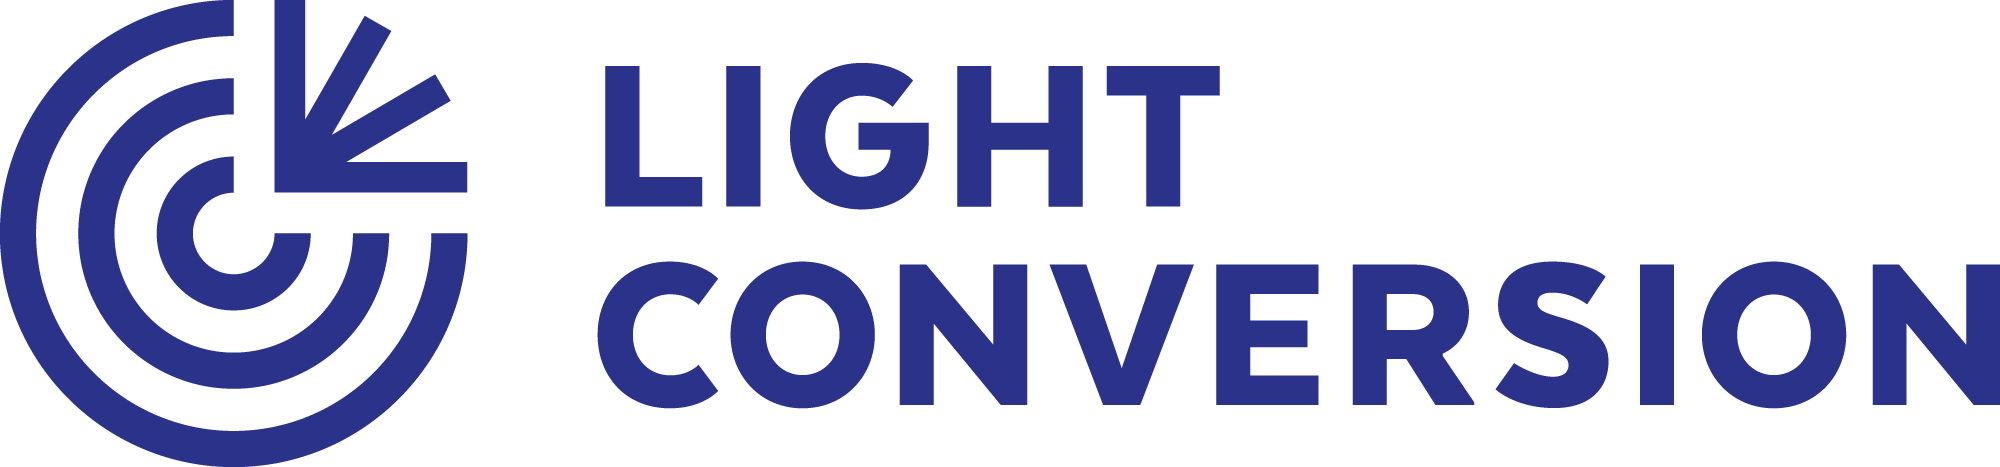 Light Convestion logo